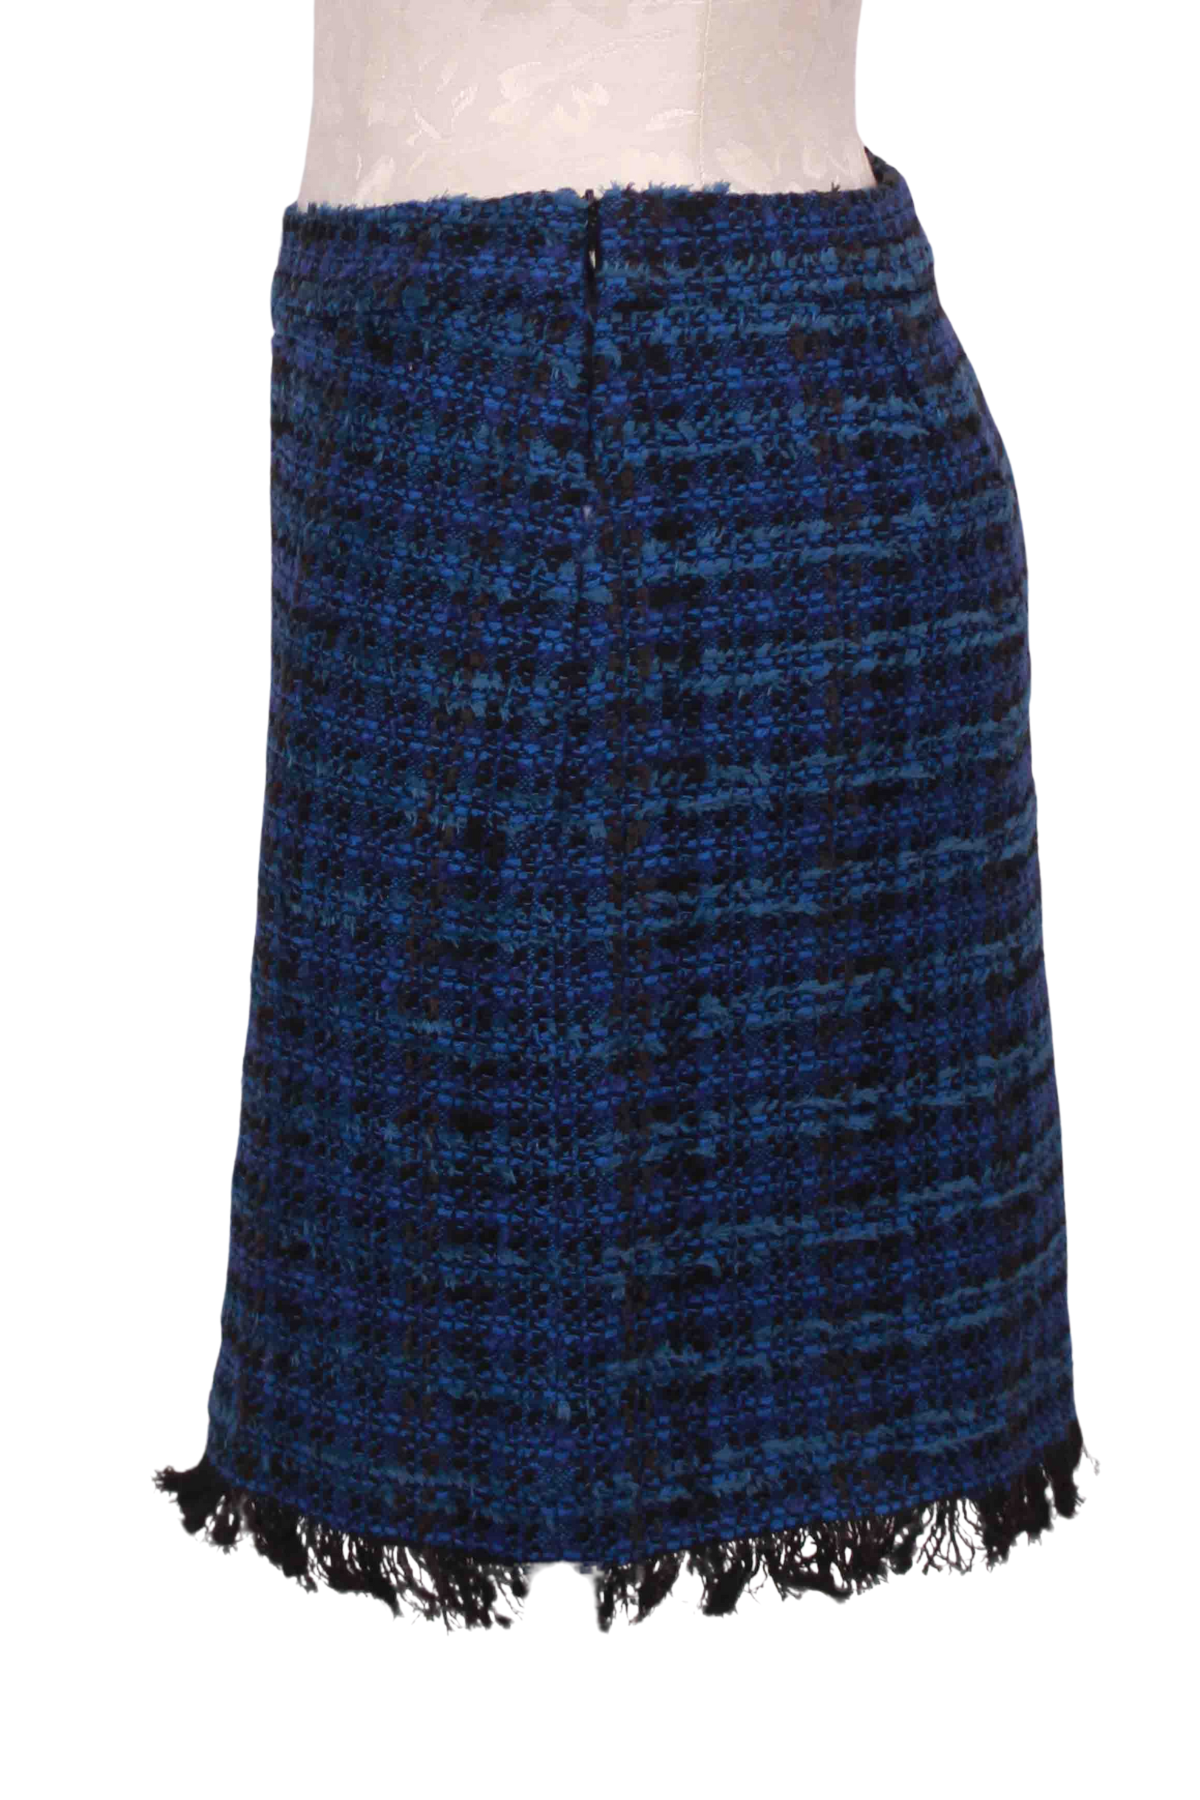 side view of Blue/Black Stormi Plaid Tweed Mini Skirt by Generation Love